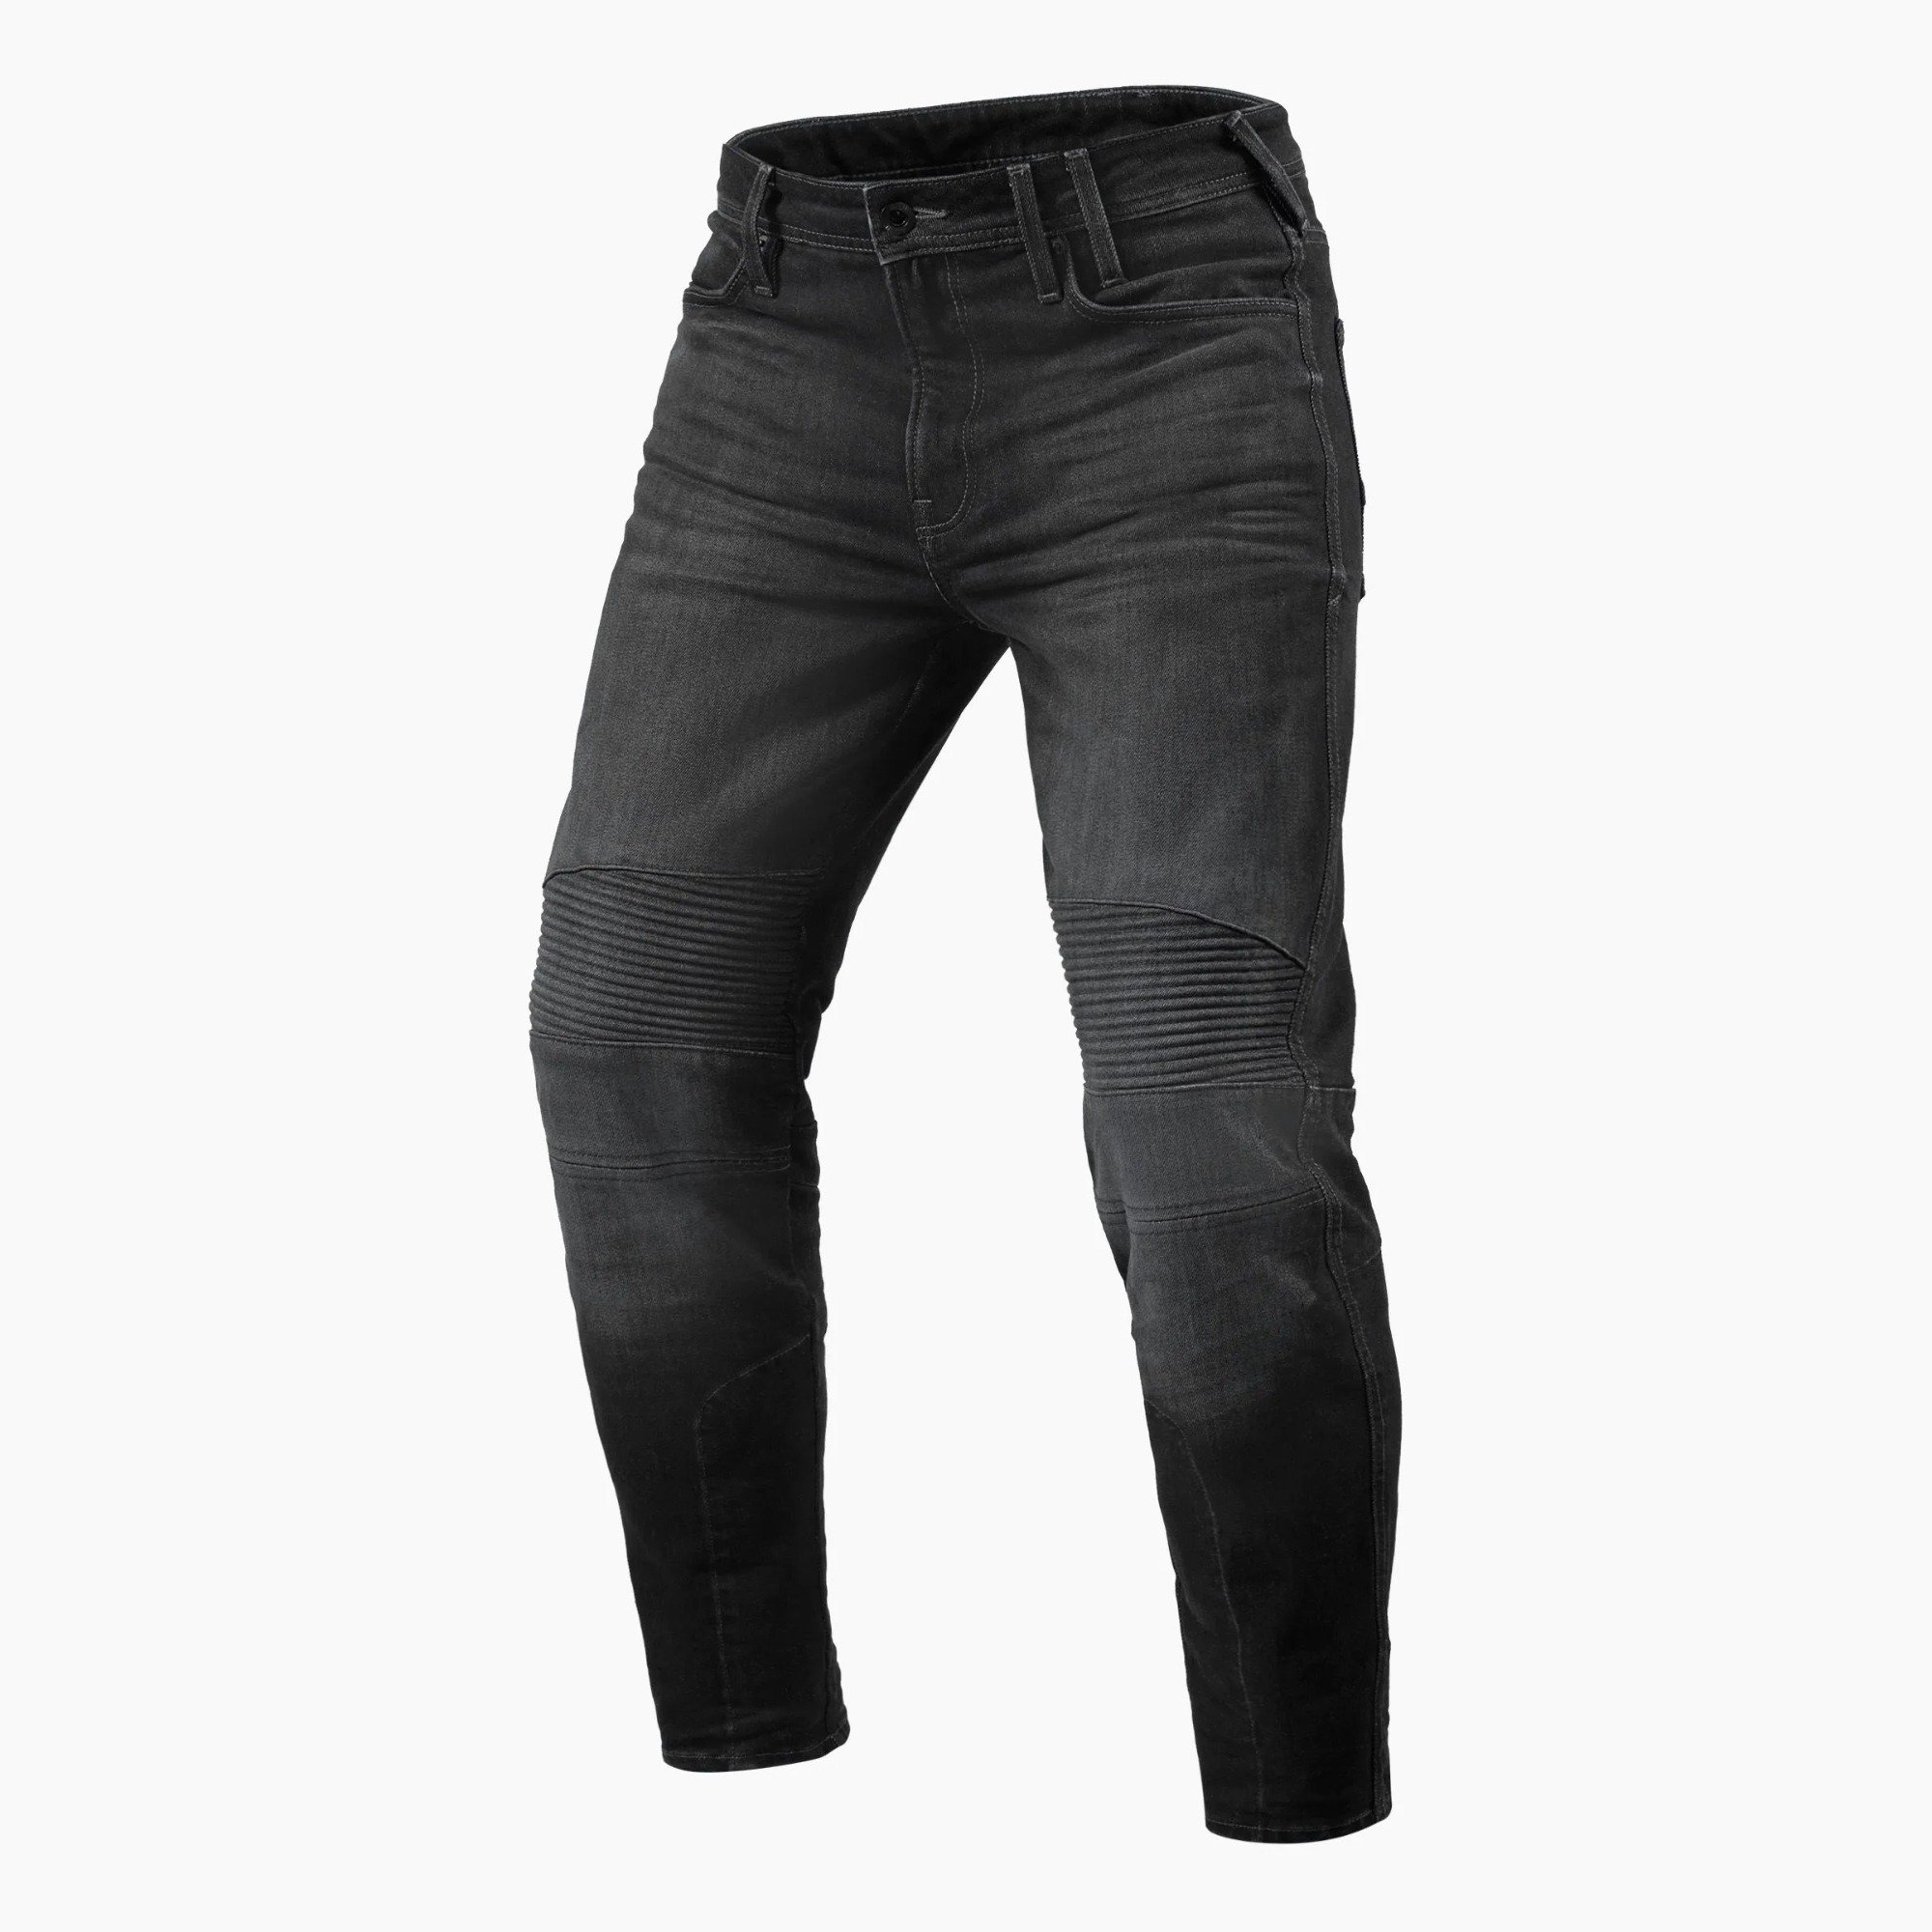 Image of REV'IT! Jeans Moto 2 TF Dark Grey Used Motorcycle Jeans Talla L36/W33